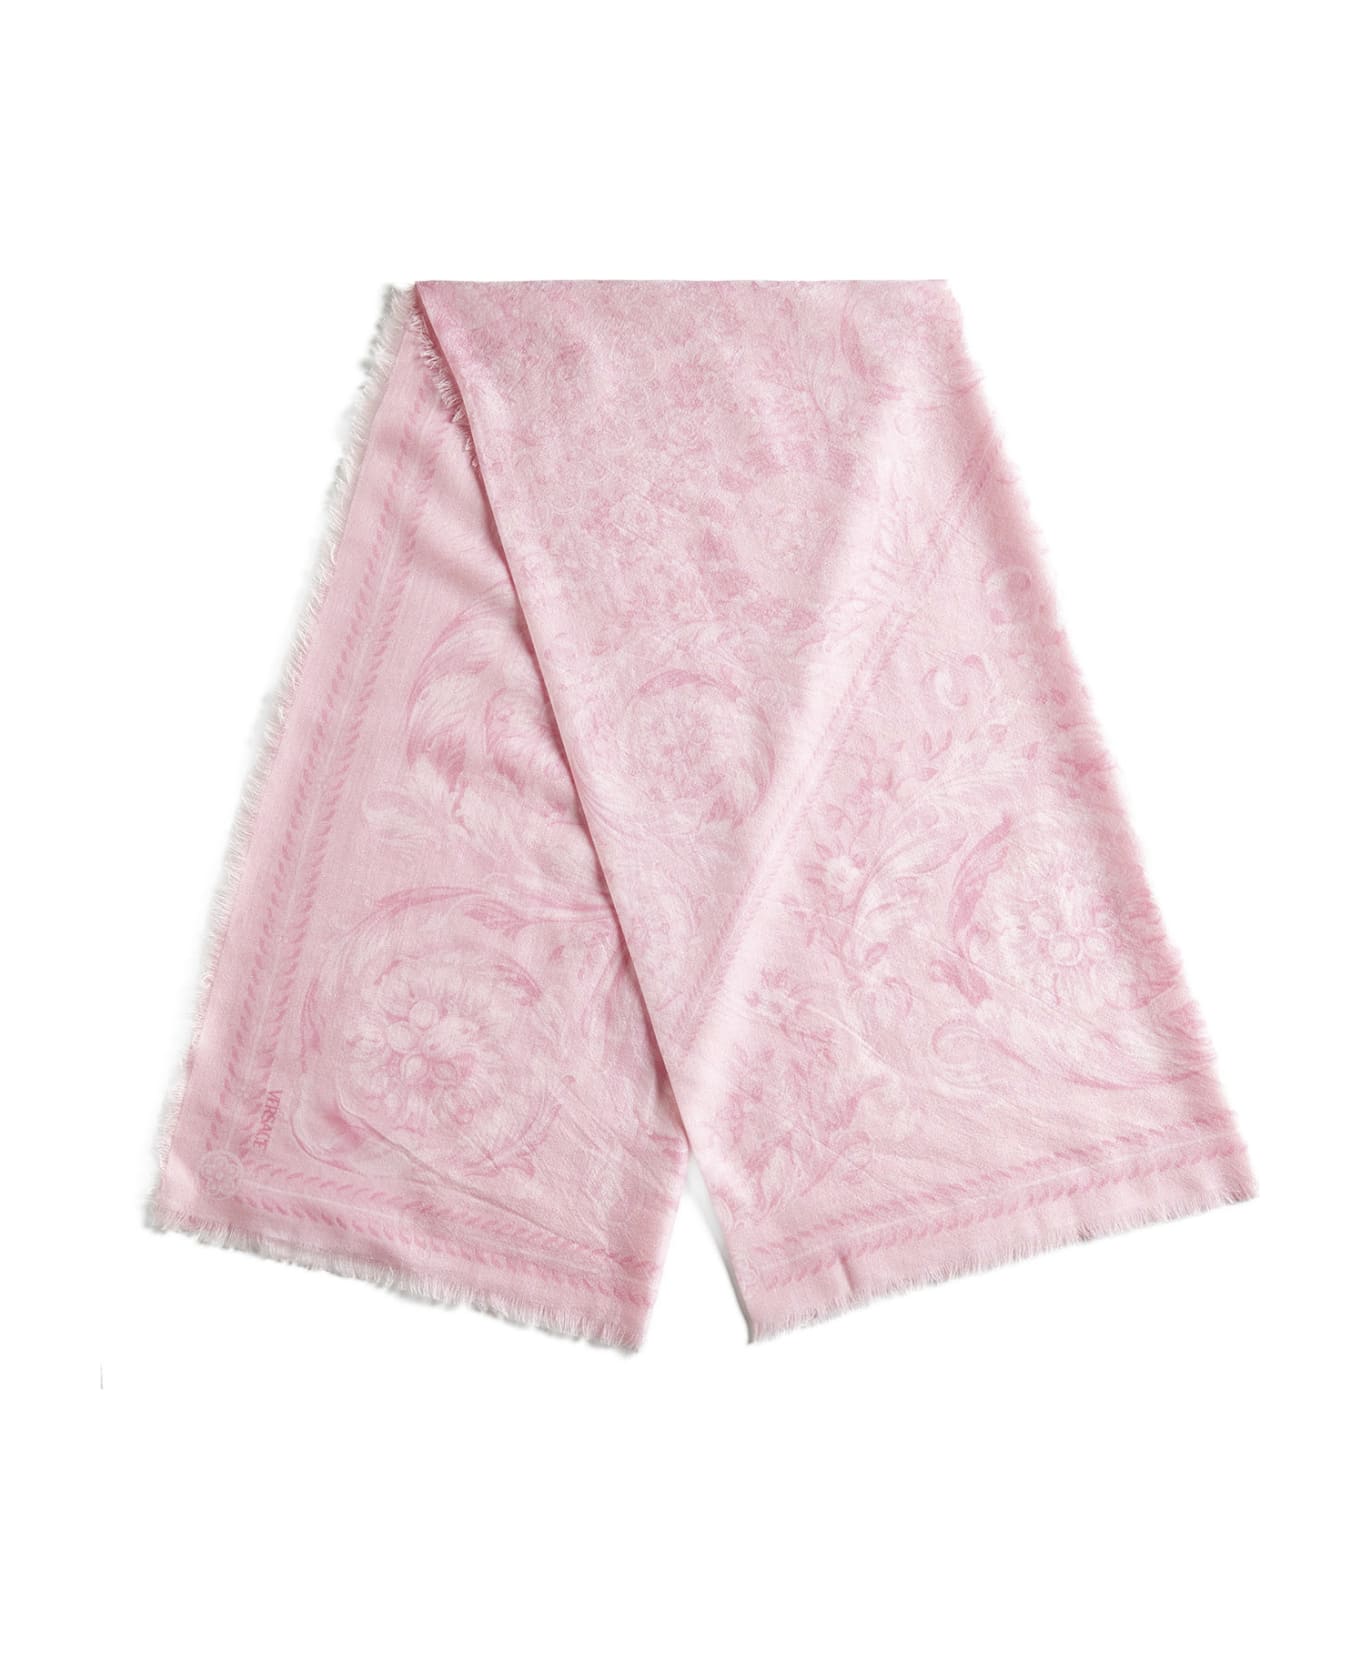 Versace Scarf - Pale pink